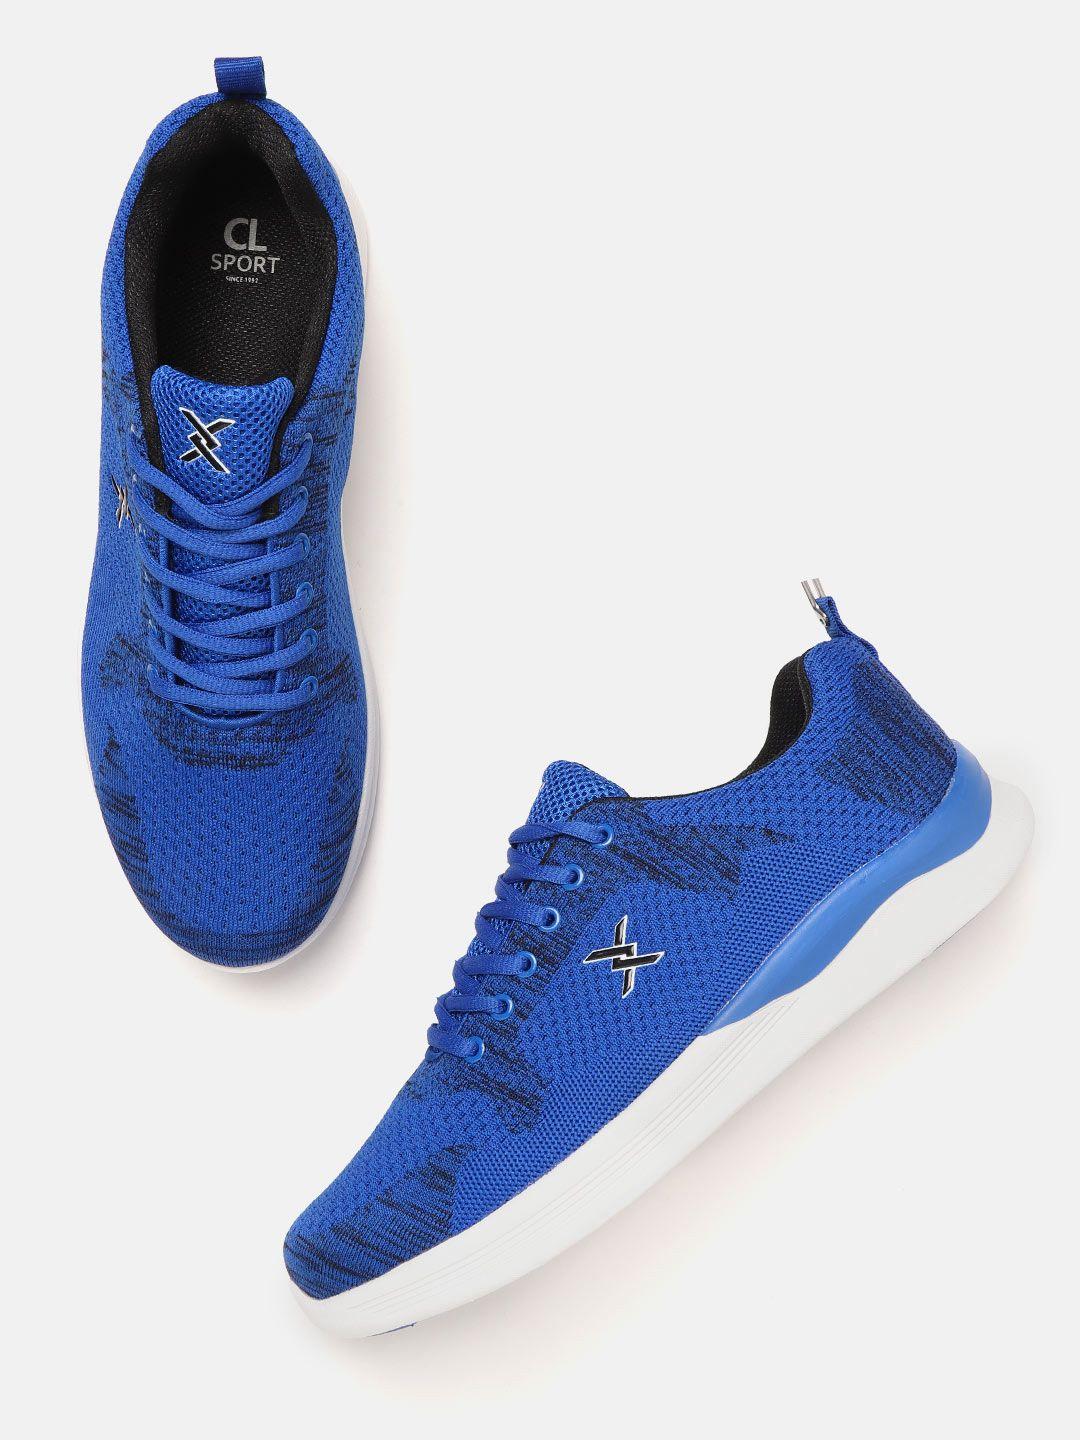 carlton-london-sports-men-blue-woven-design-running-shoes